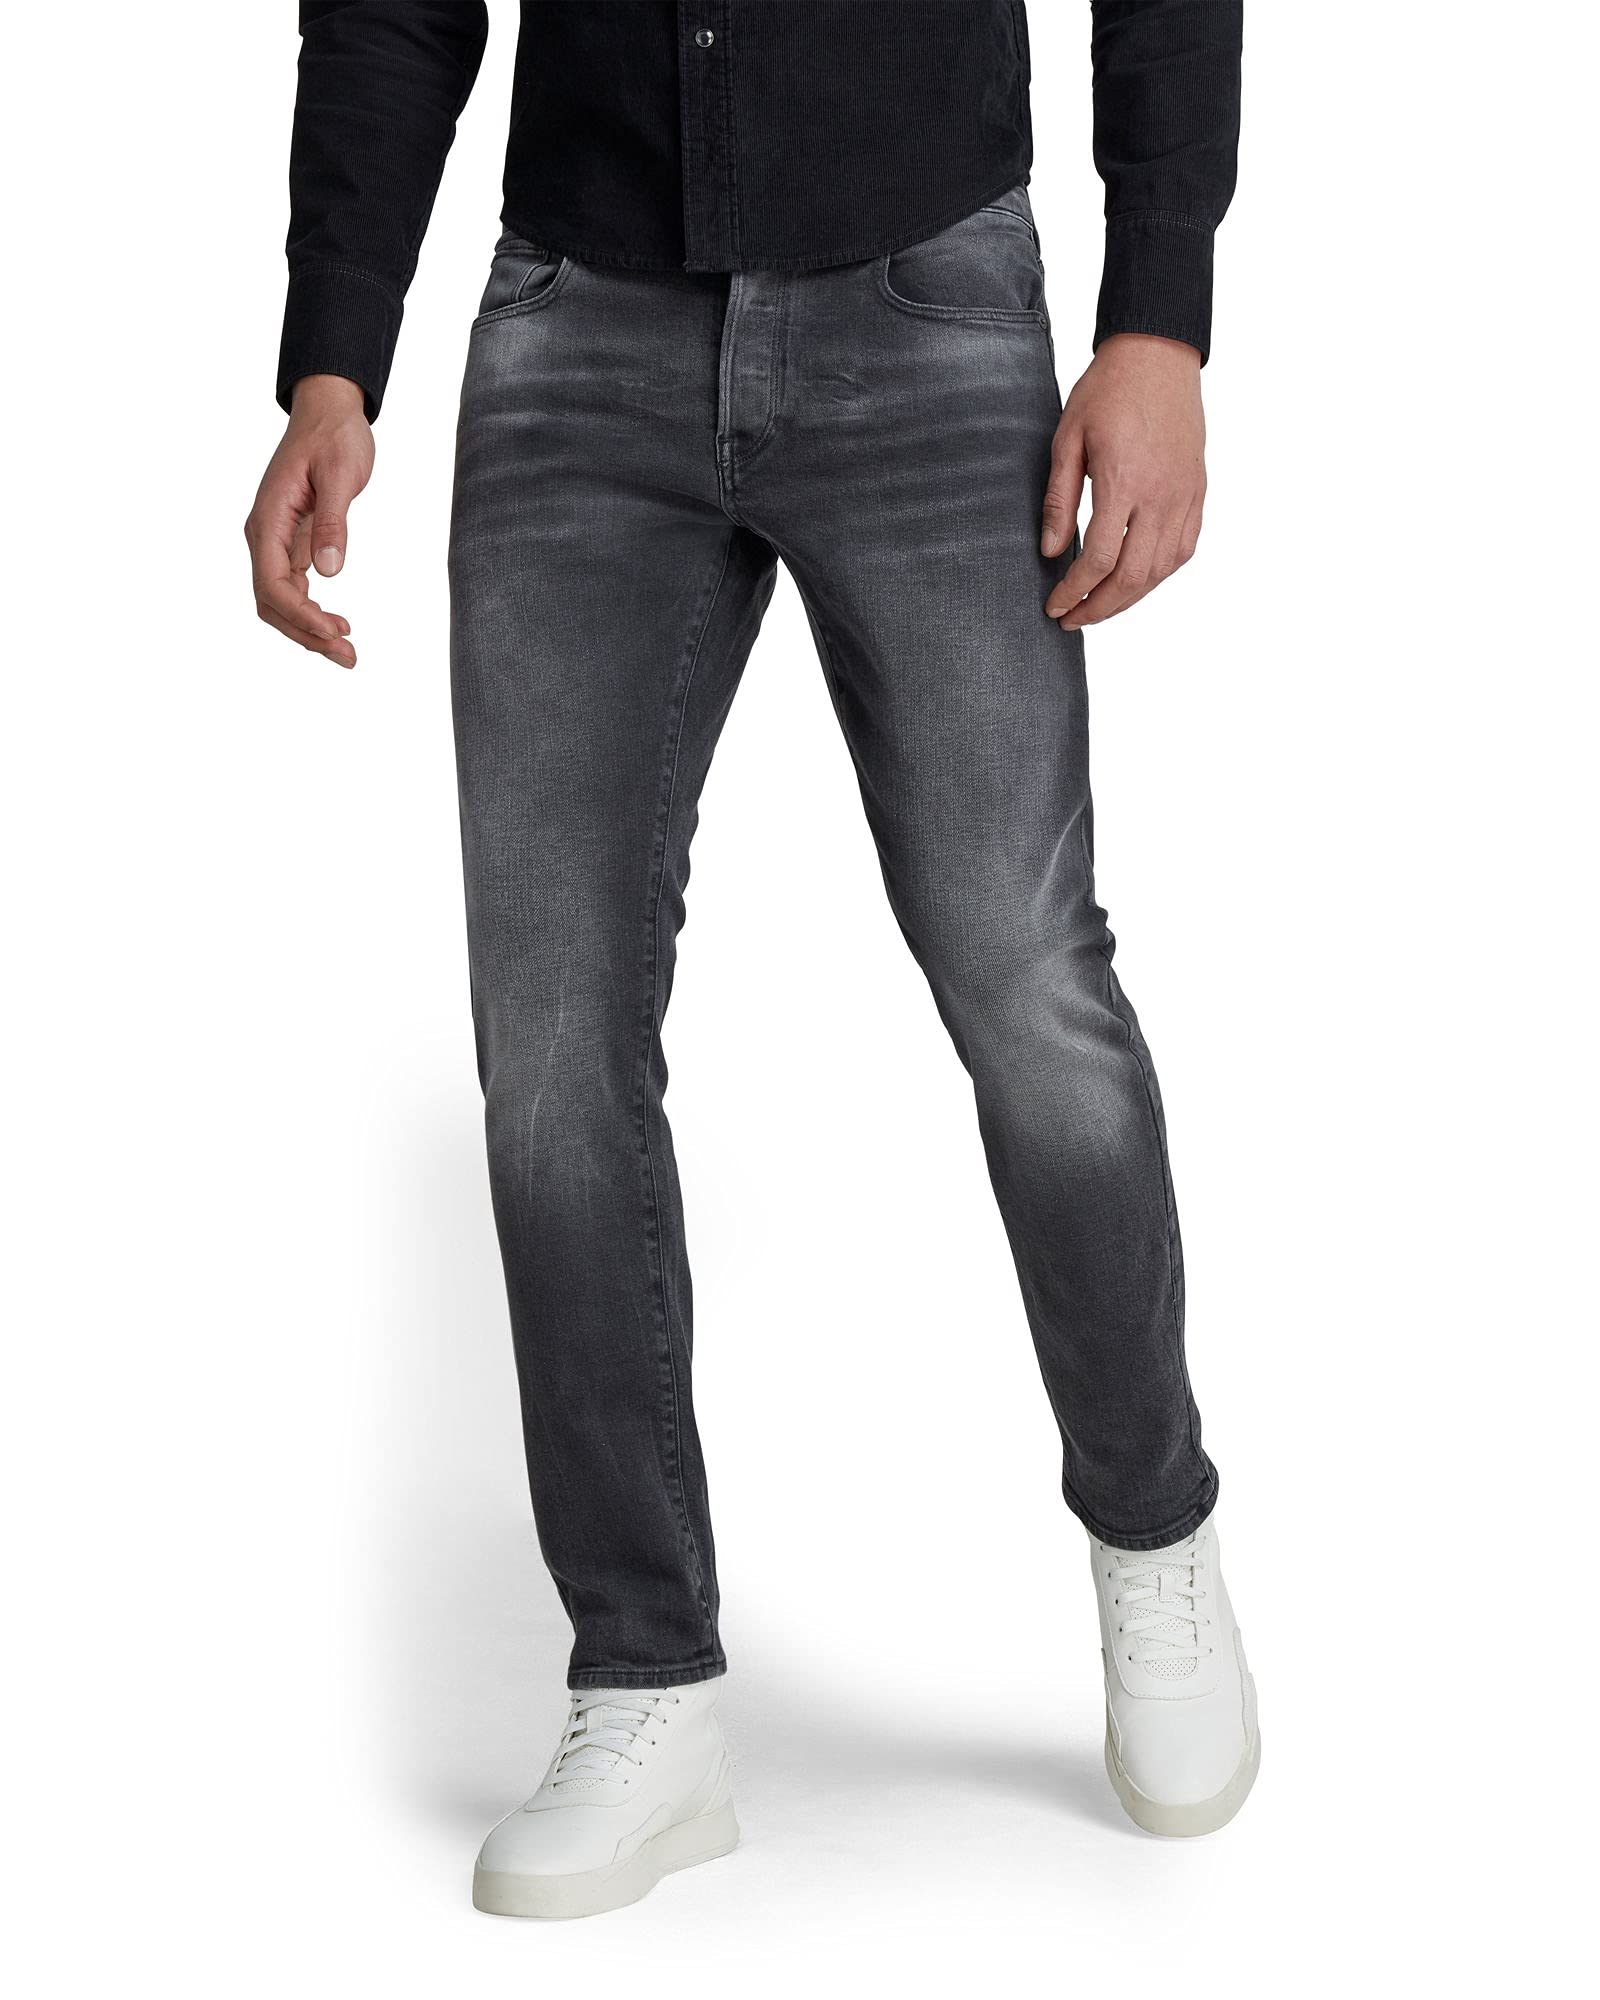 G-STAR RAW Herren 3301 Slim Jeans, Schwarz (antic charcoal 51001-B479-A800), 38W / 36L